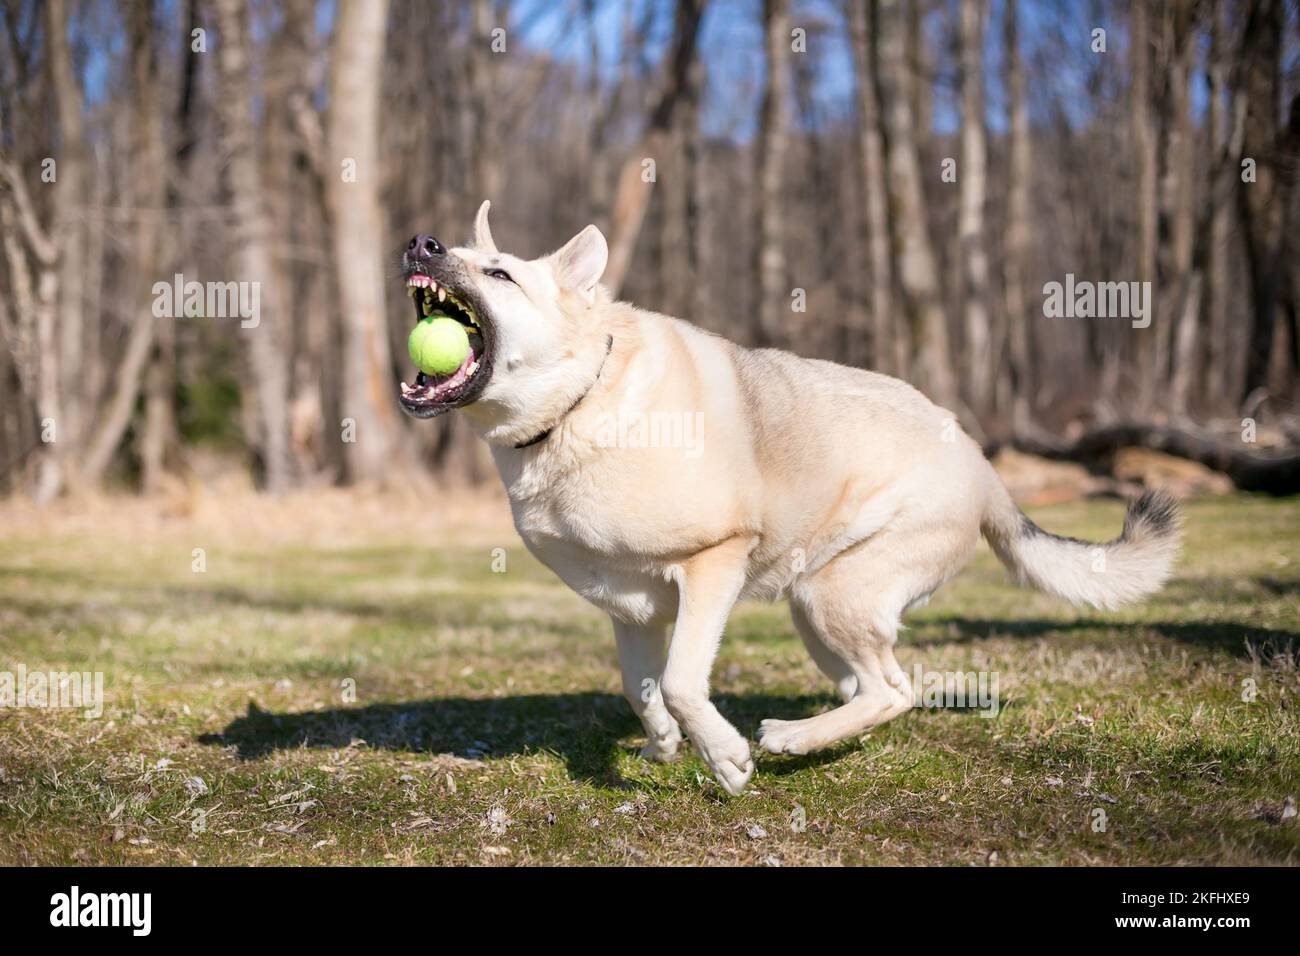 A German Shepherd x Husky mixed breed dog catching a ball Stock Photo